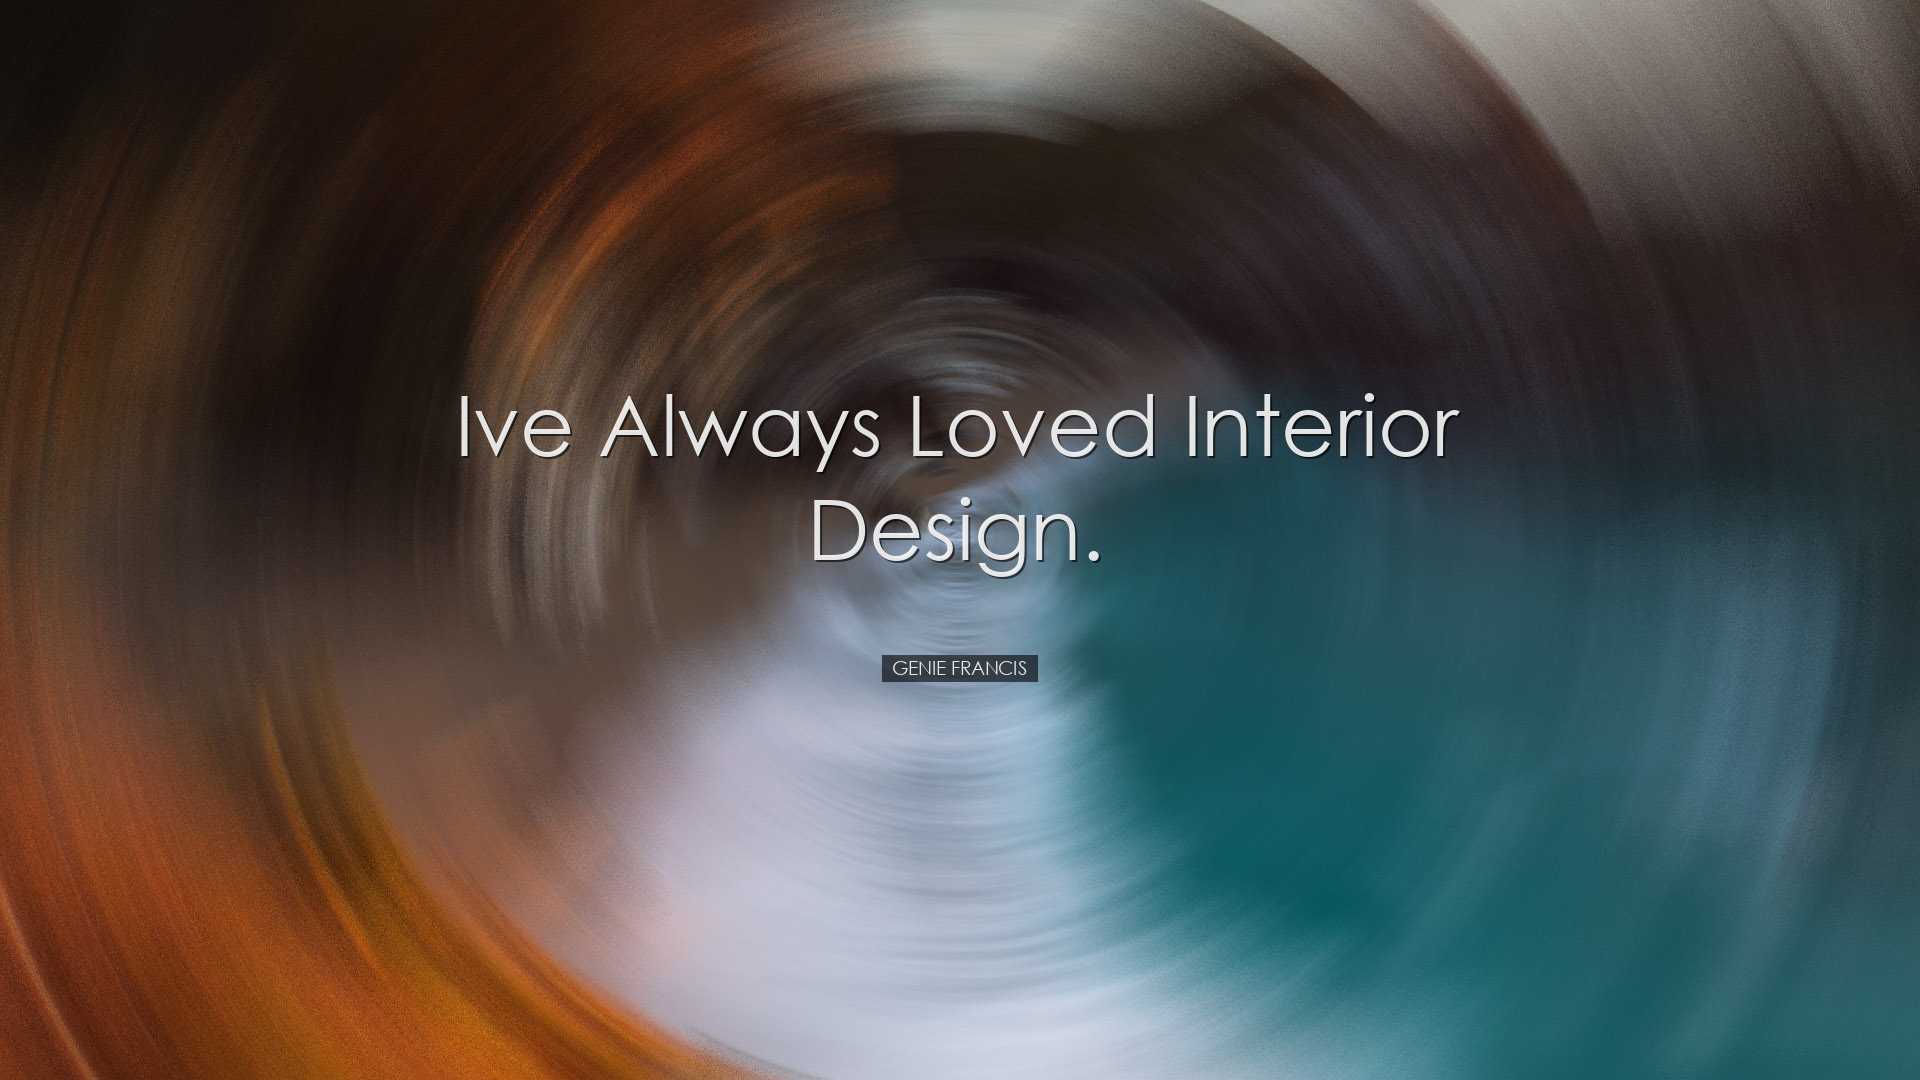 Ive always loved interior design. - Genie Francis